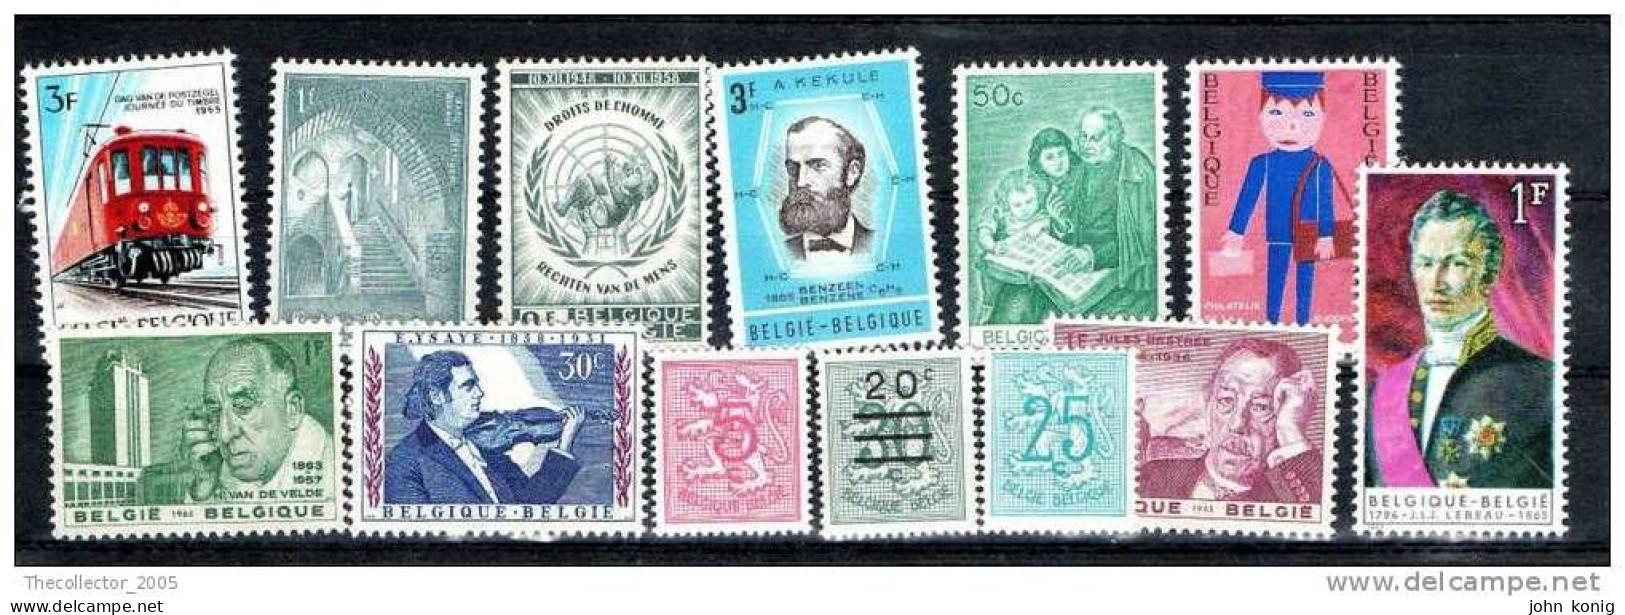 Belgio - Belgie - Belgique - Stamps Lot - New - Neuf - Superbe Lot - Colecciones